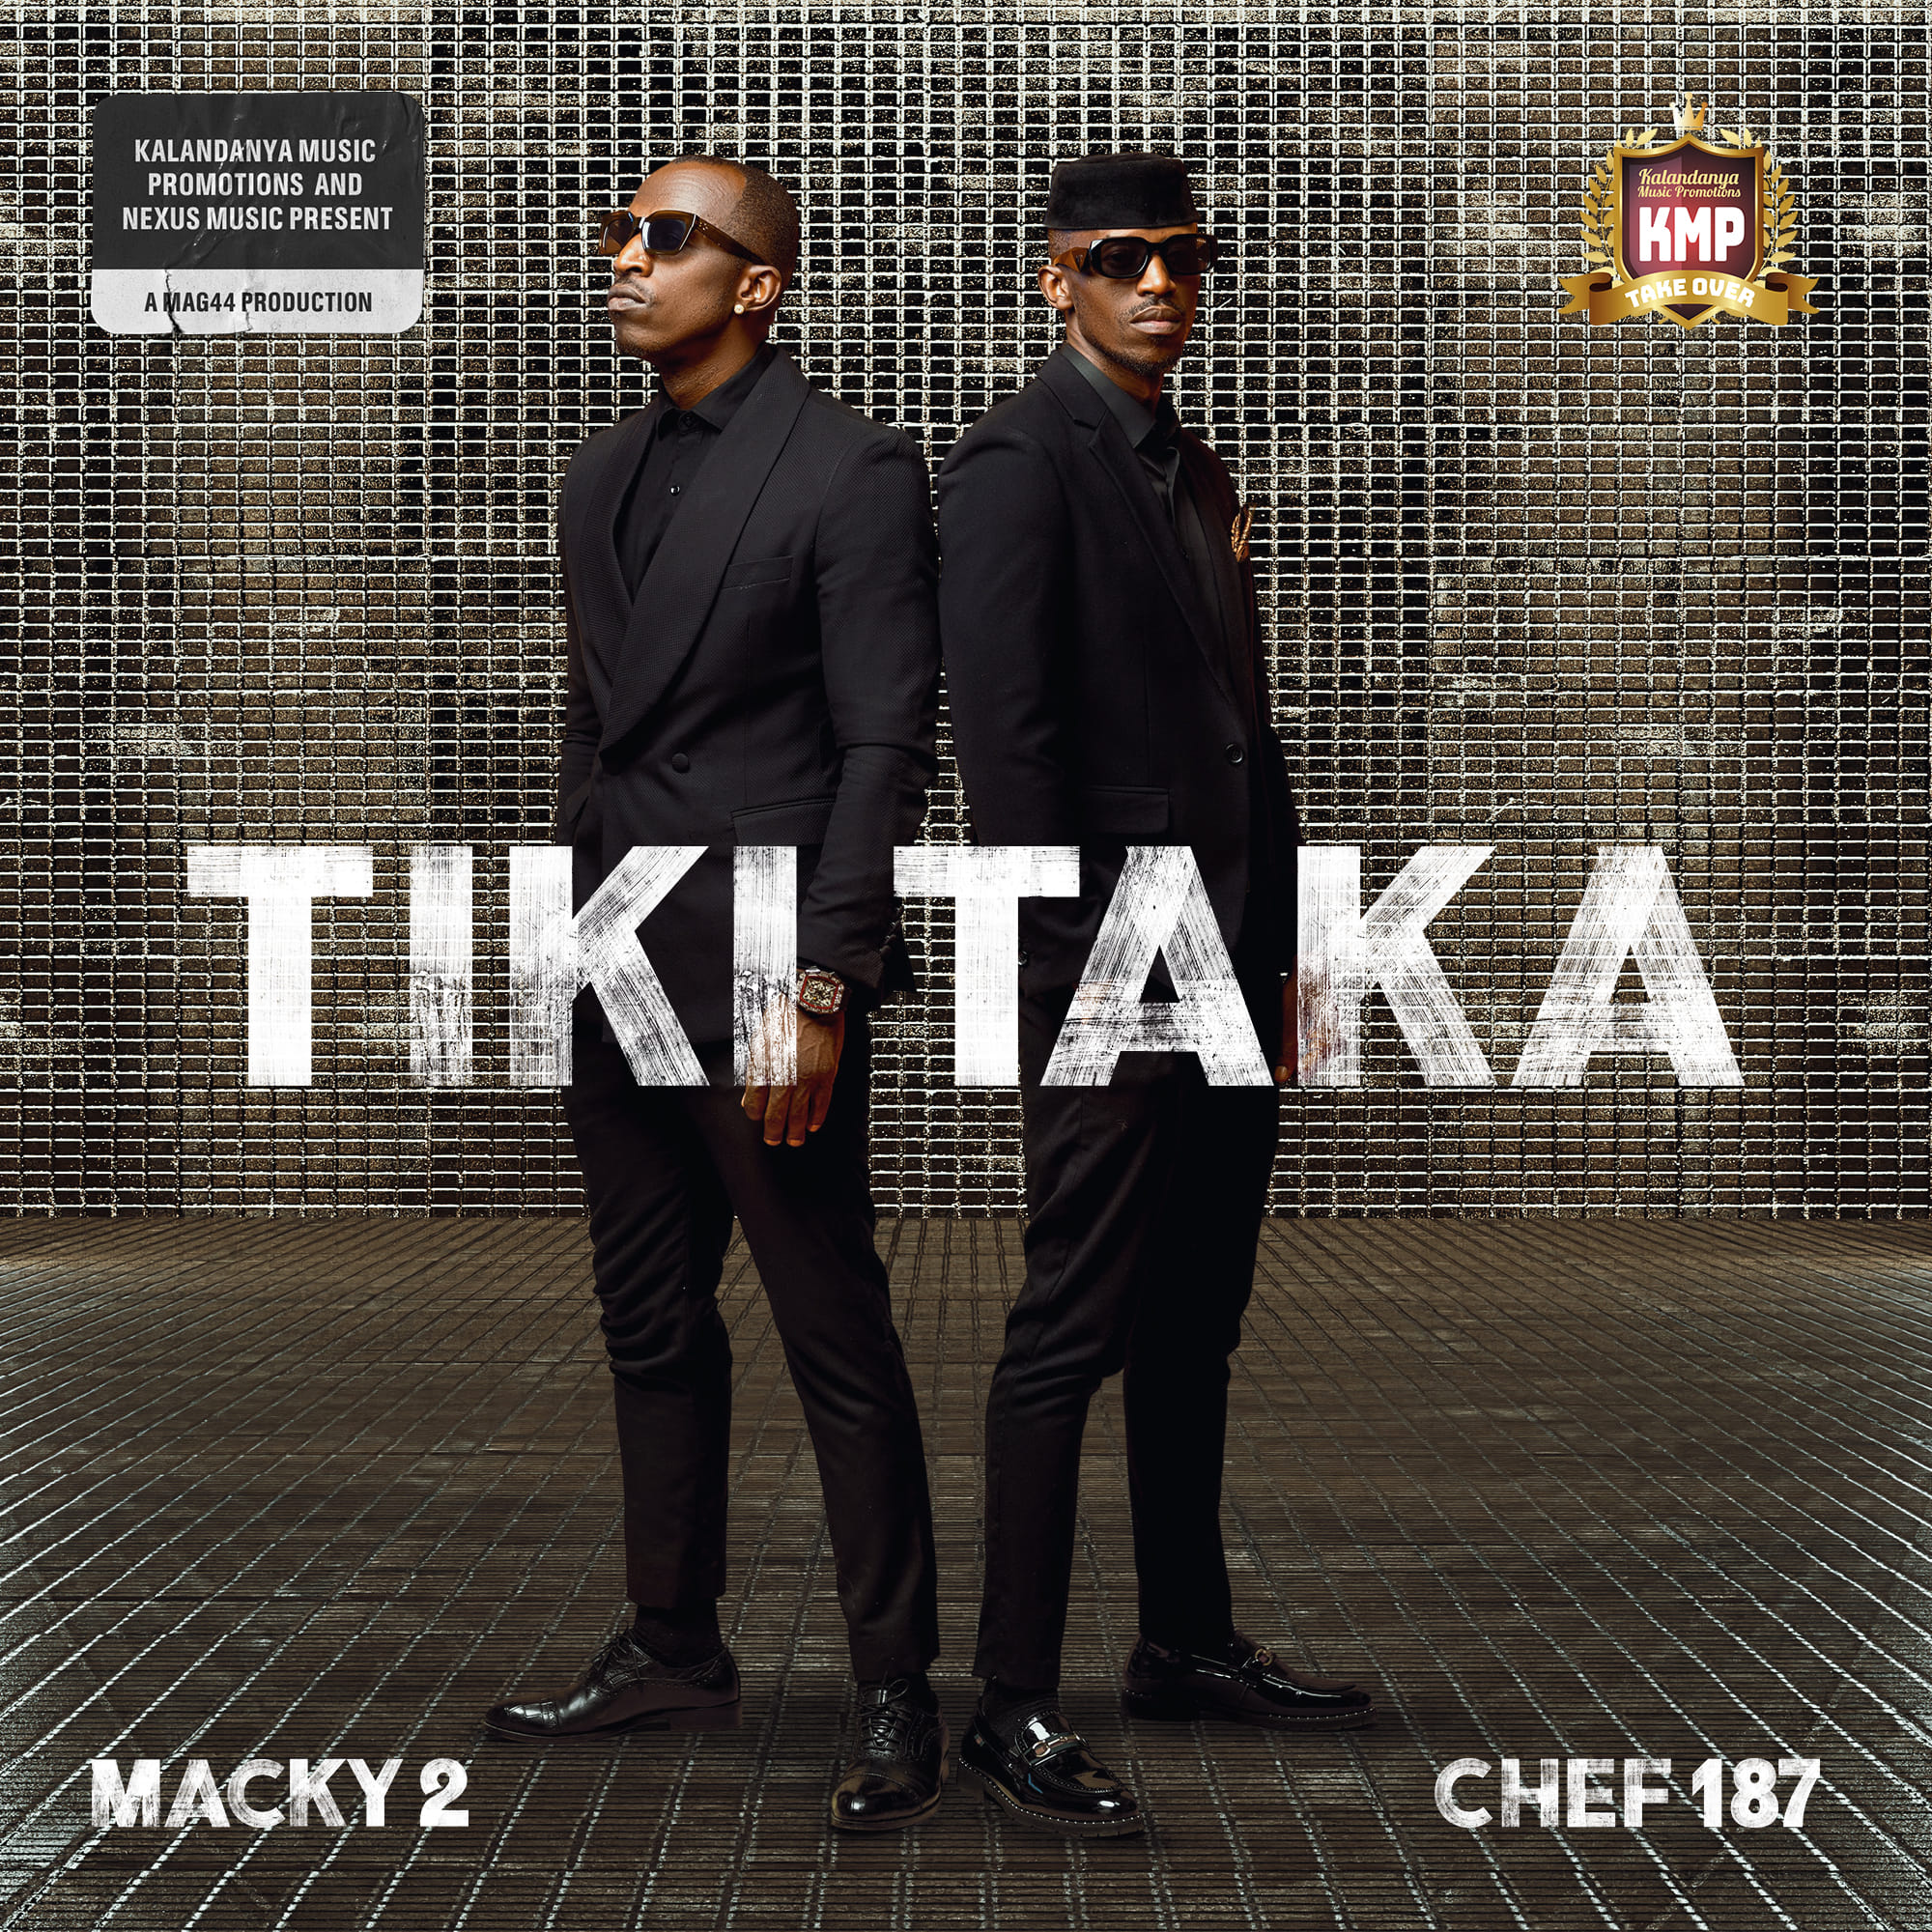 Macky 2 Ft Chef 187 Tiki Taka Mp3 Download